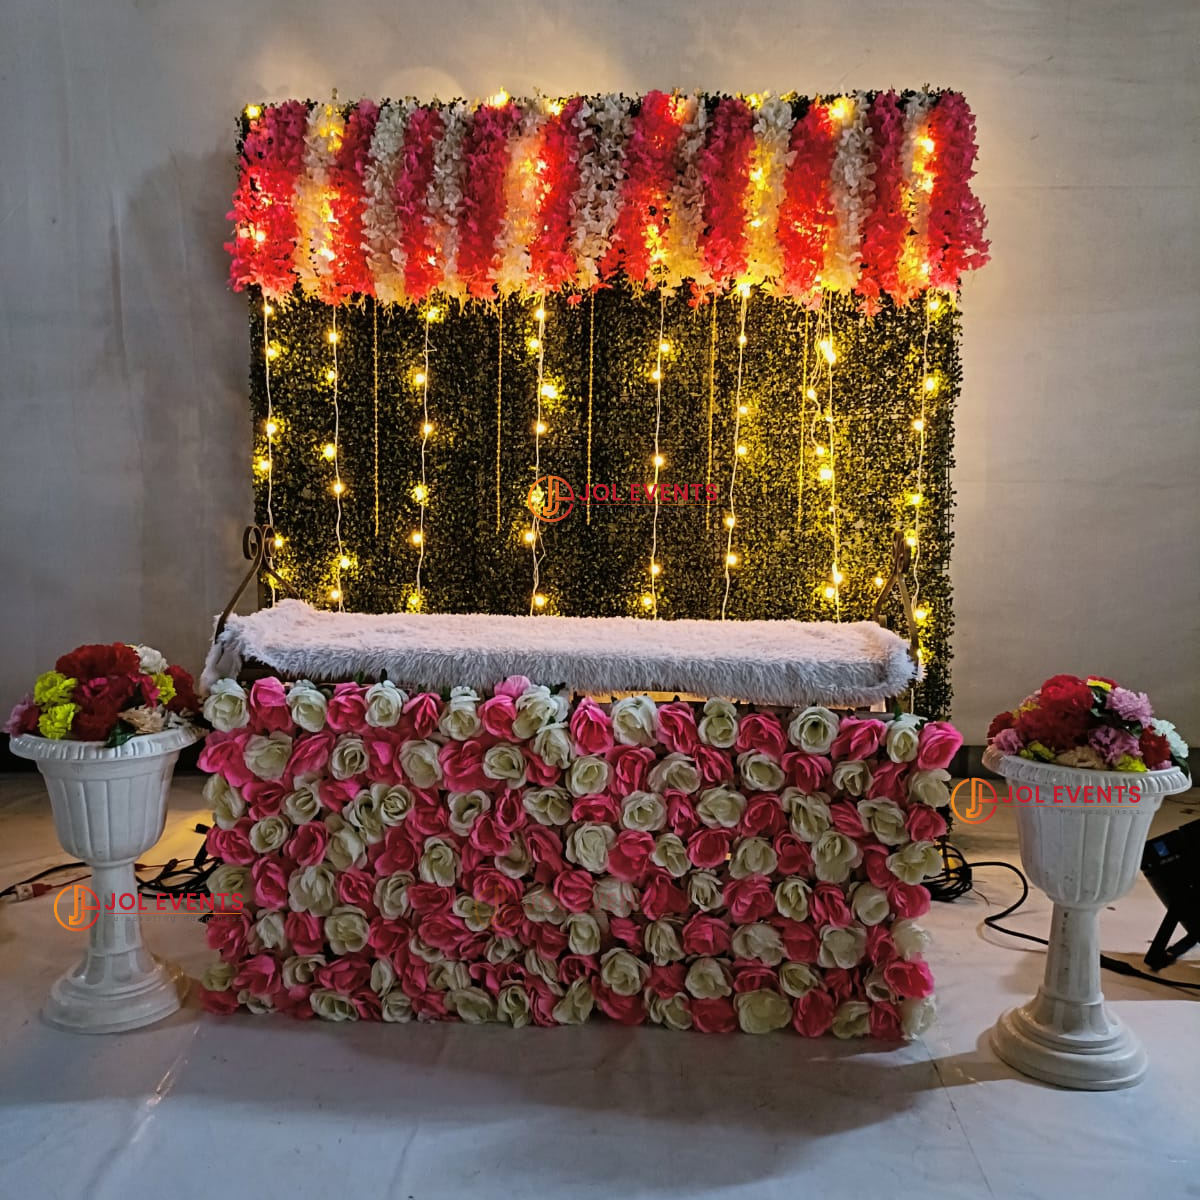 Ganpati Decoration Ideas: 25+ Homemade Ganesh Decoration Ideas with  Flowers, Lights